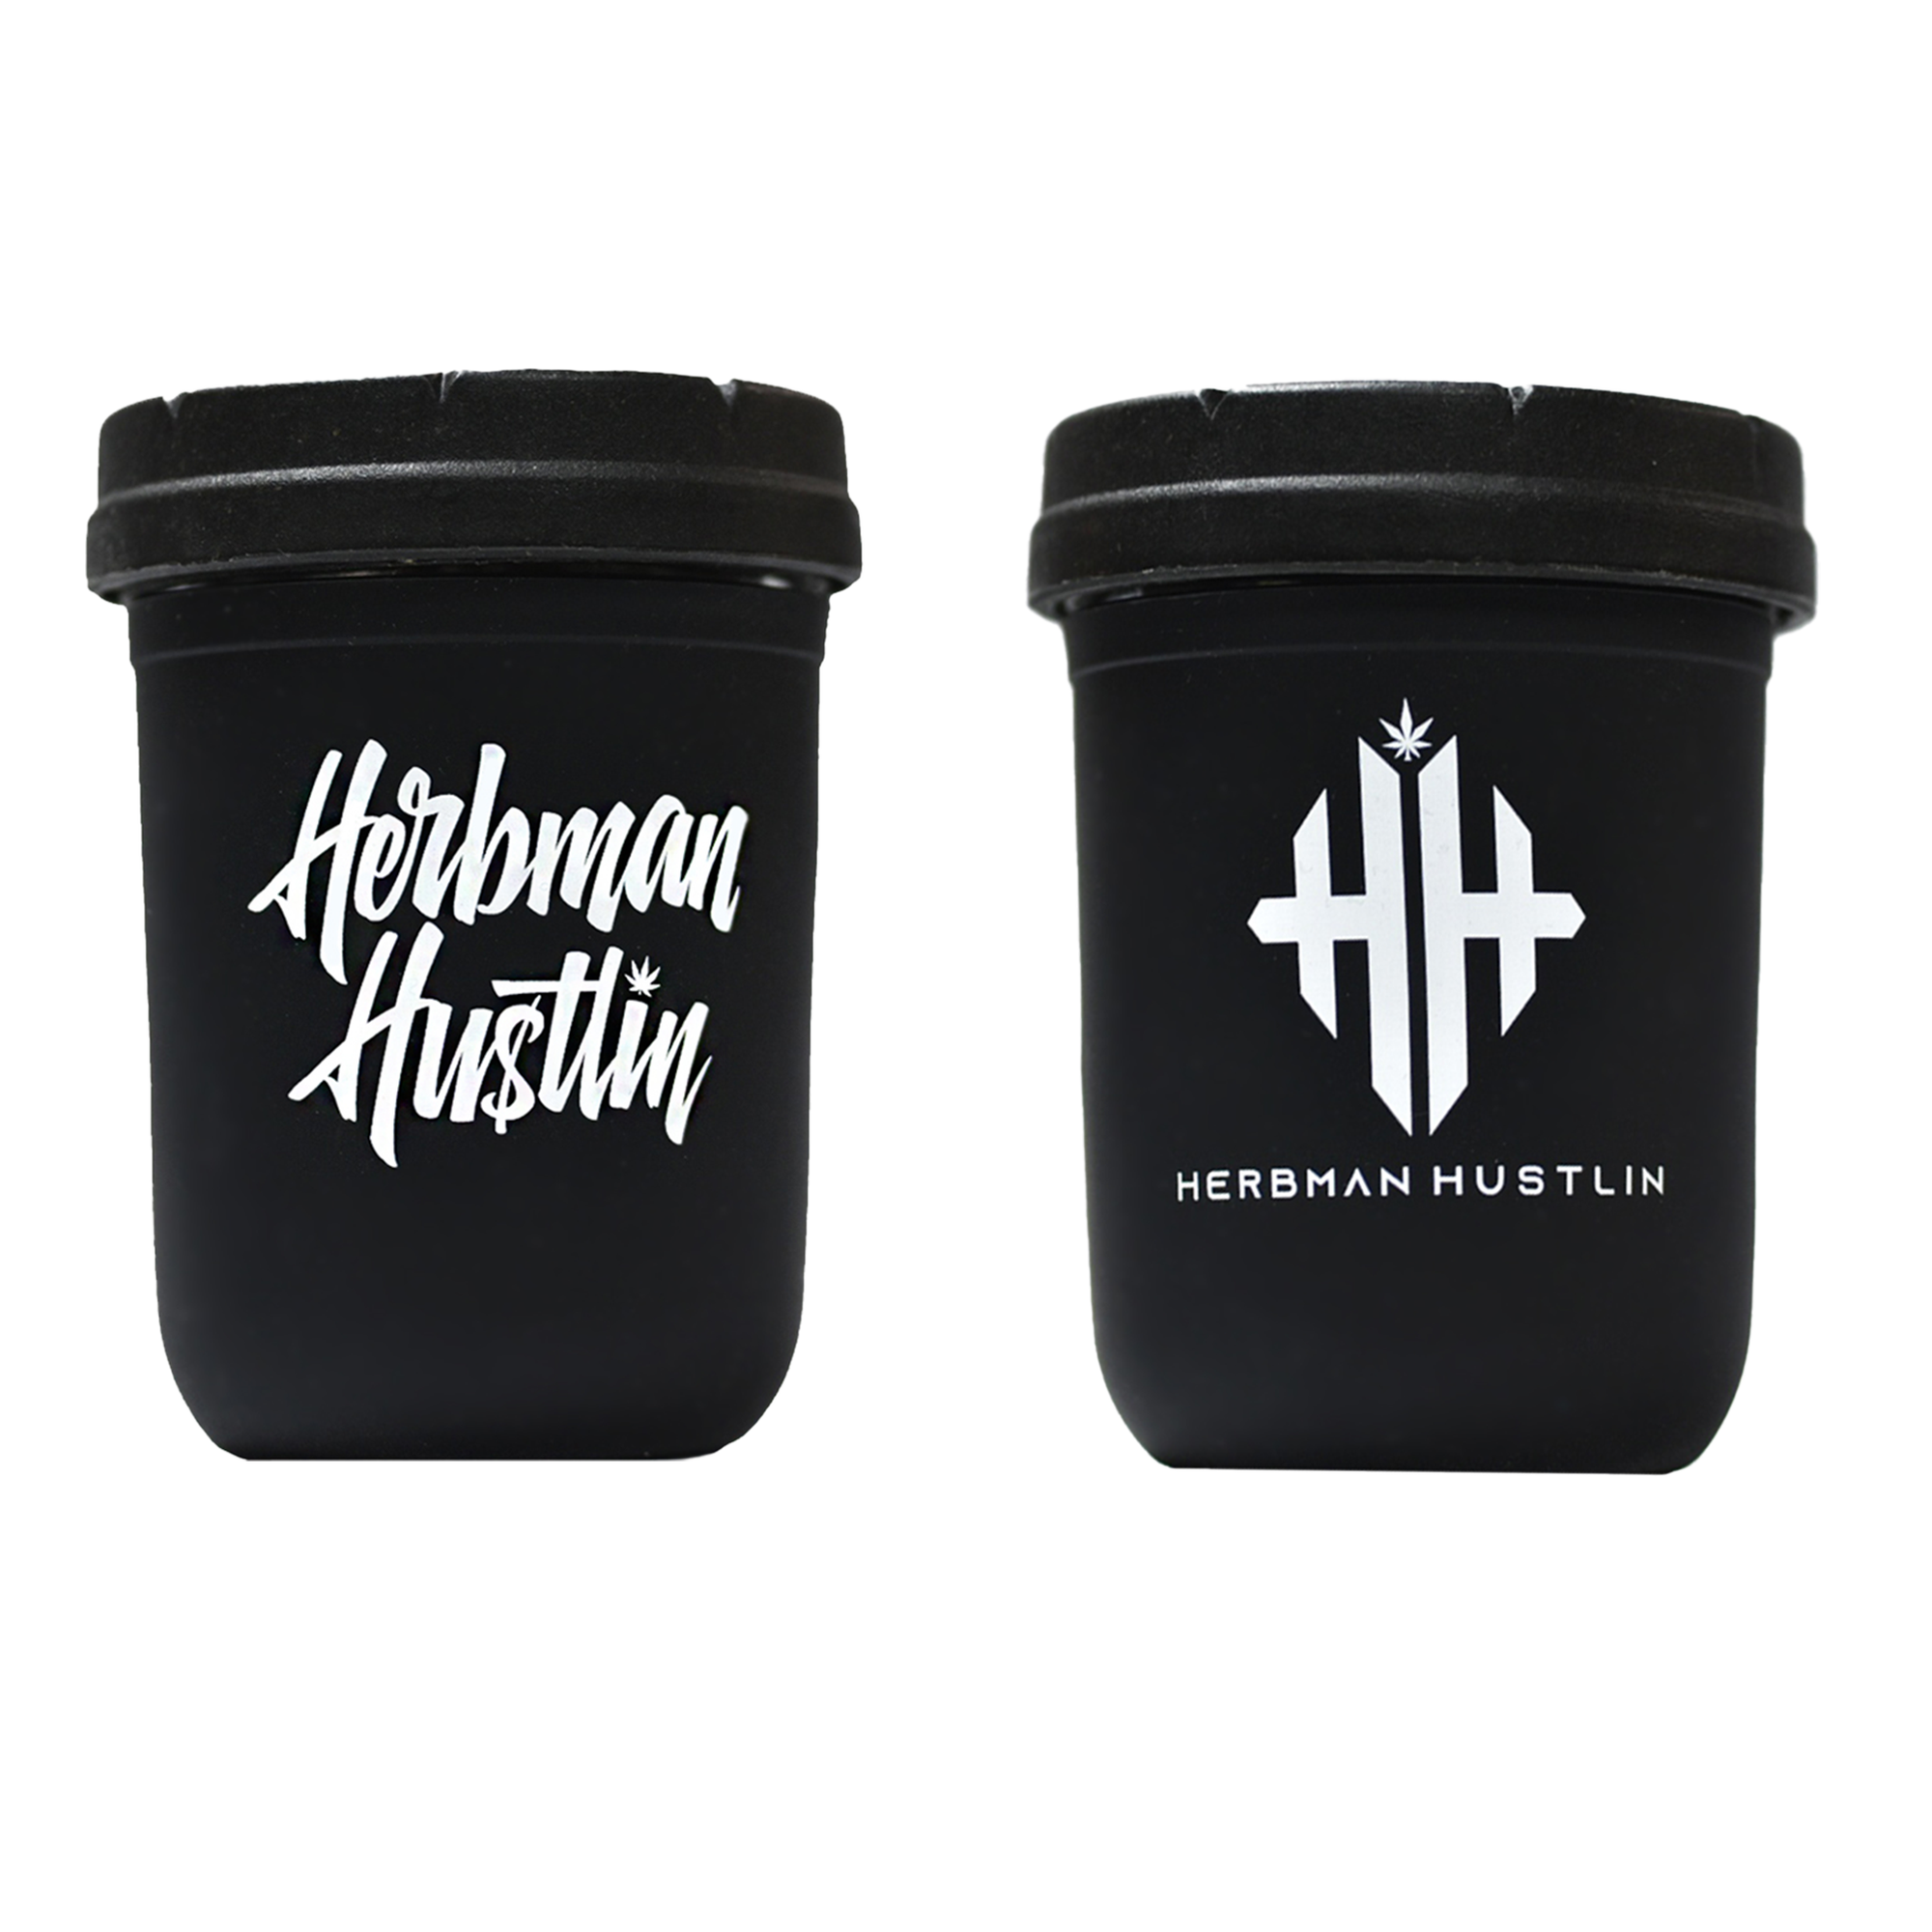 Herbman Hustlin 8oz Re-Stash Jar - Black/White